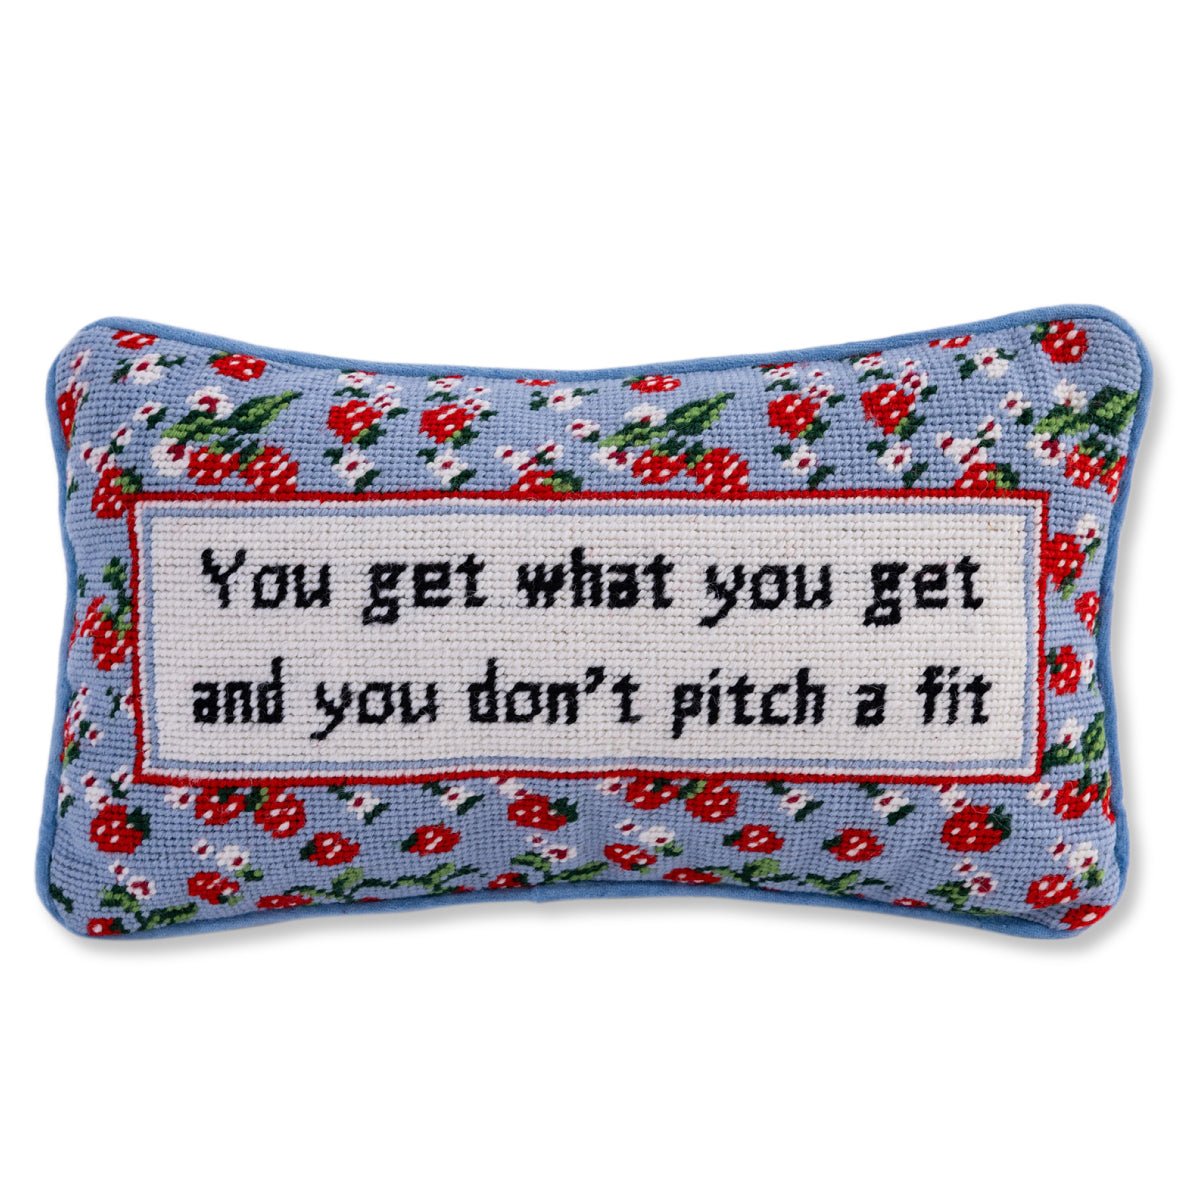 Get What You Get Needlepoint Pillow - Throw Pillows - Furbish Studio - The Grove